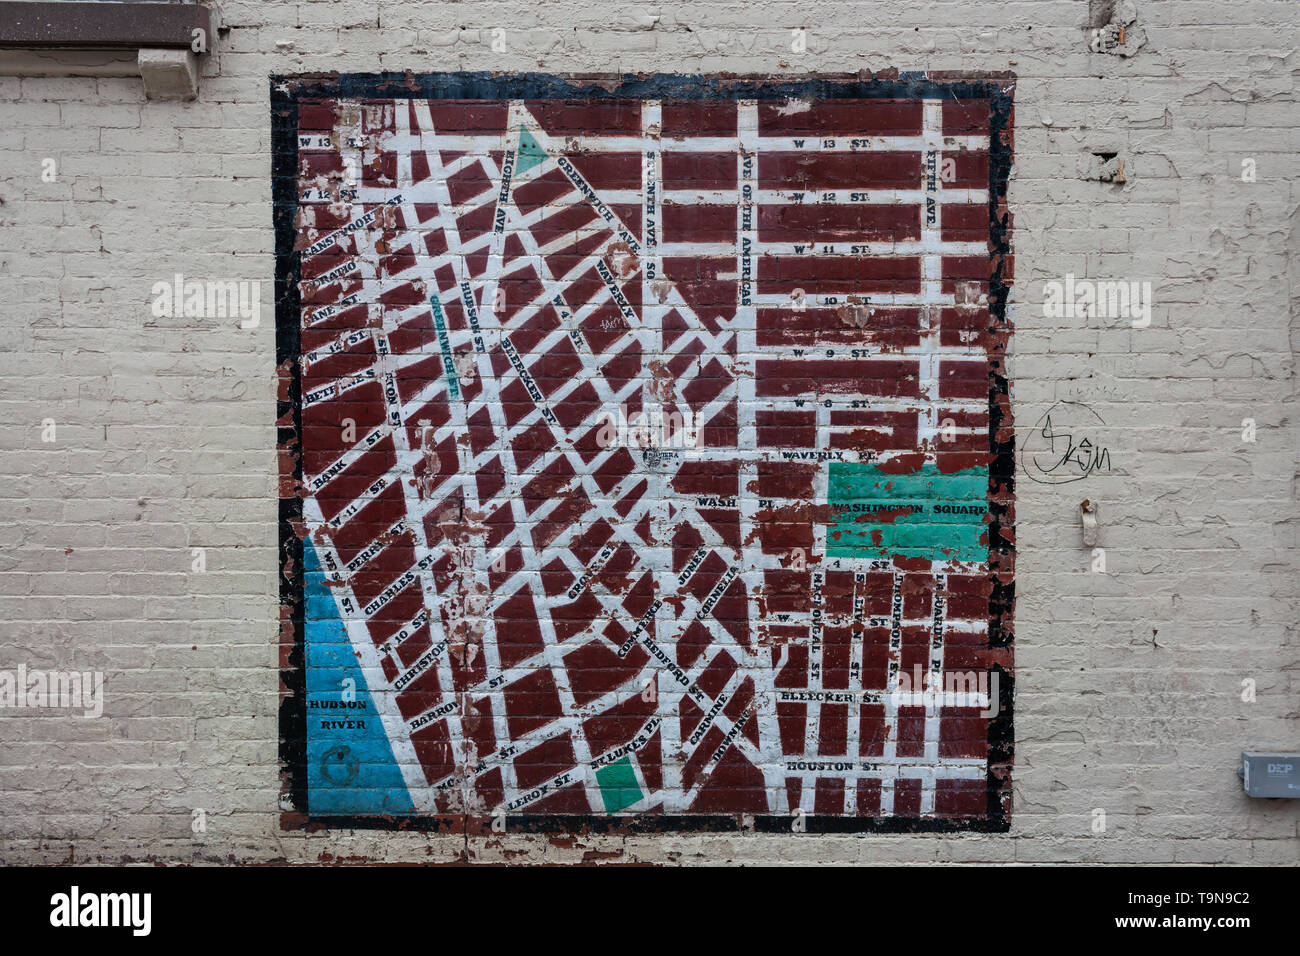 A mural map of Greenwich Village, W. 10th Street, Lower Manhattan, New York City, USA Stock Photo